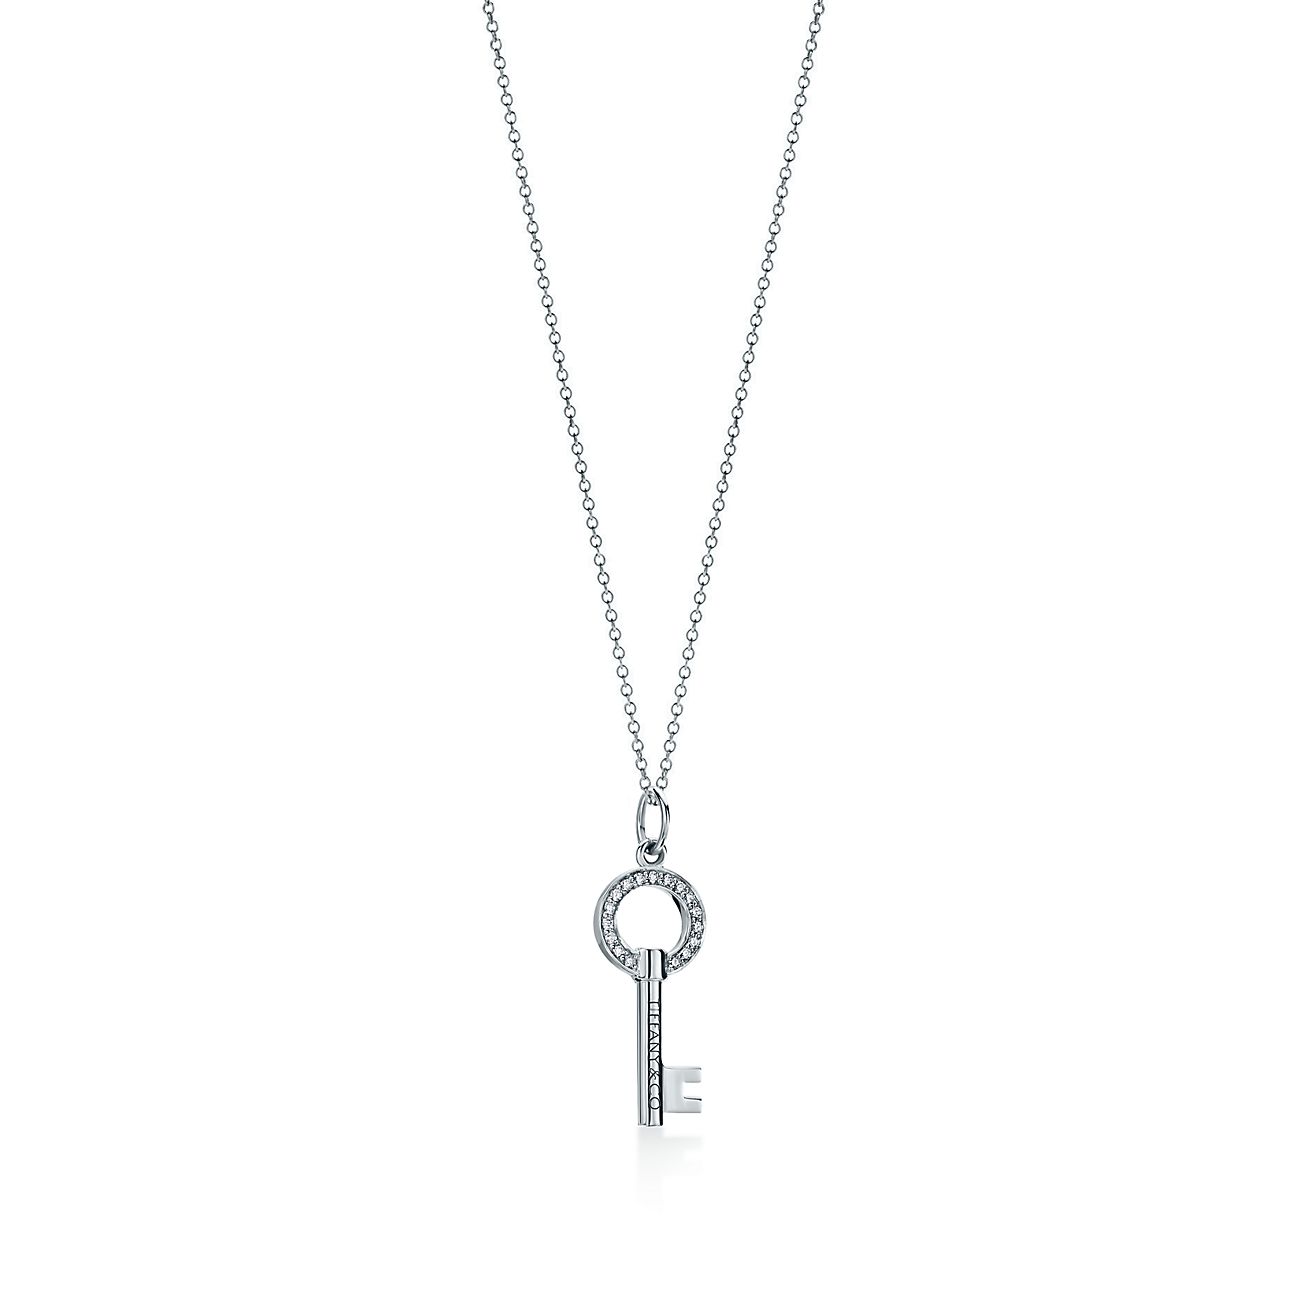 Tiffany Keys modern keys open round key pendant in 18k white gold with  diamonds.